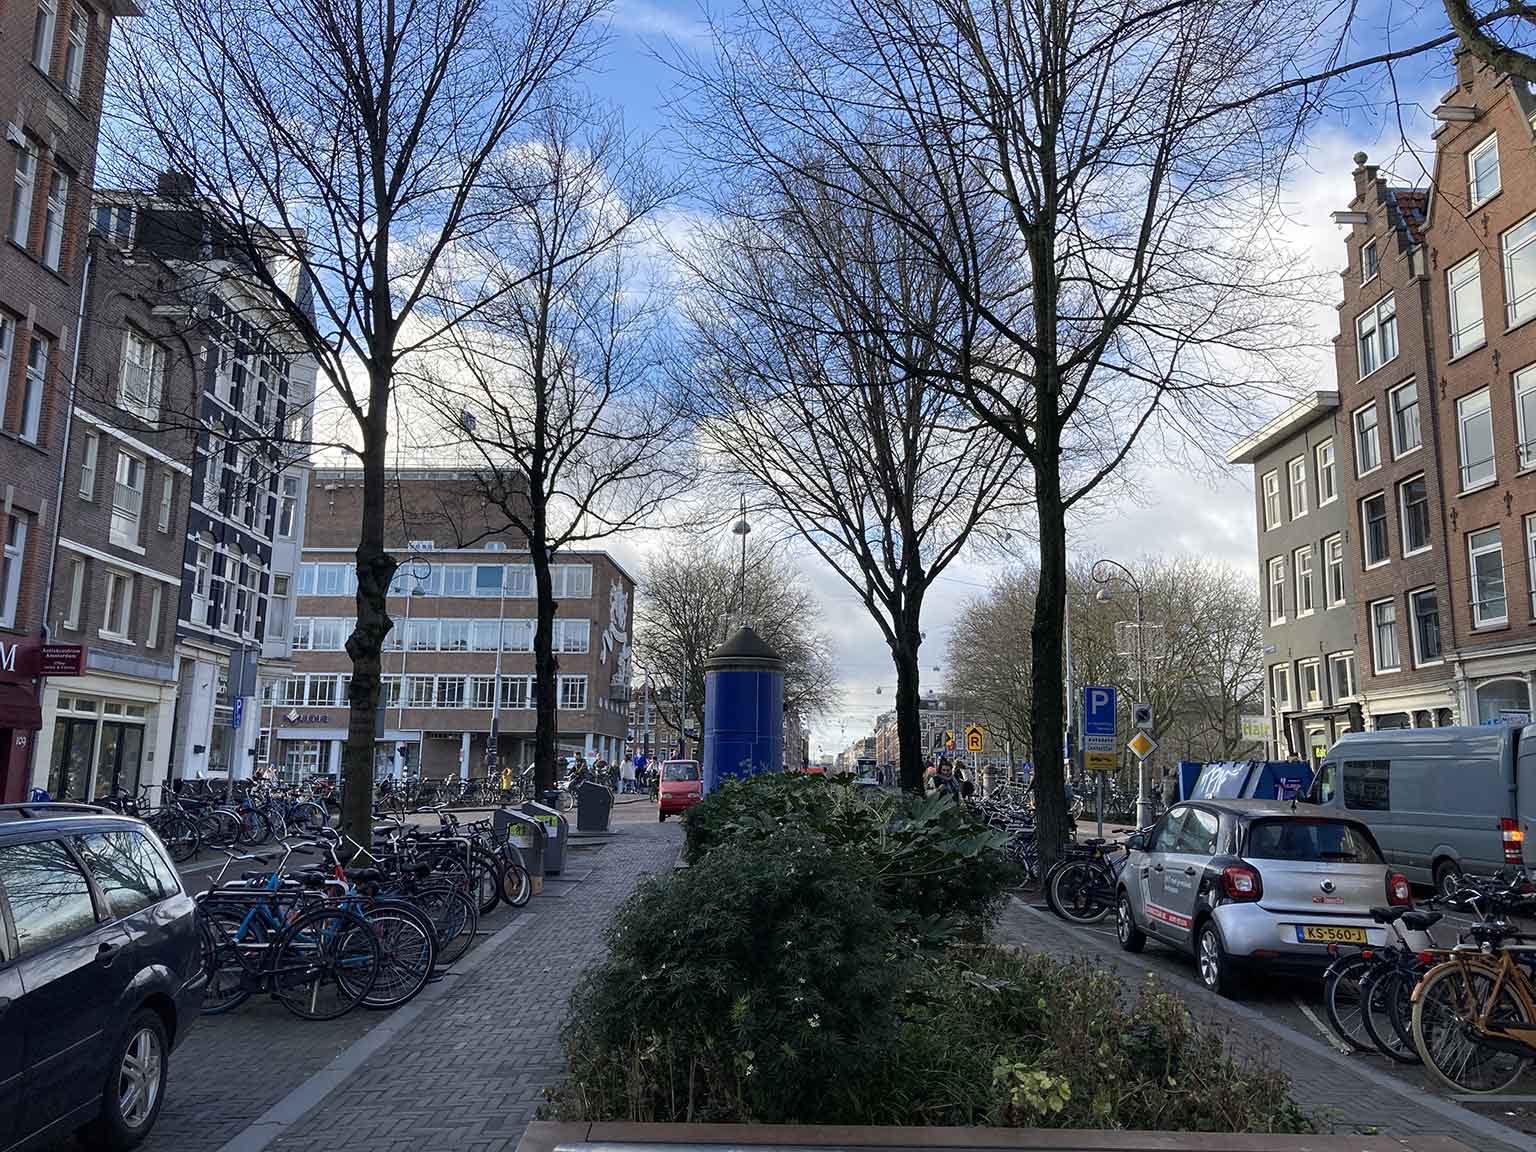 Elandsgracht, Amsterdam, seen in southwestern direction towards Marnixstraat